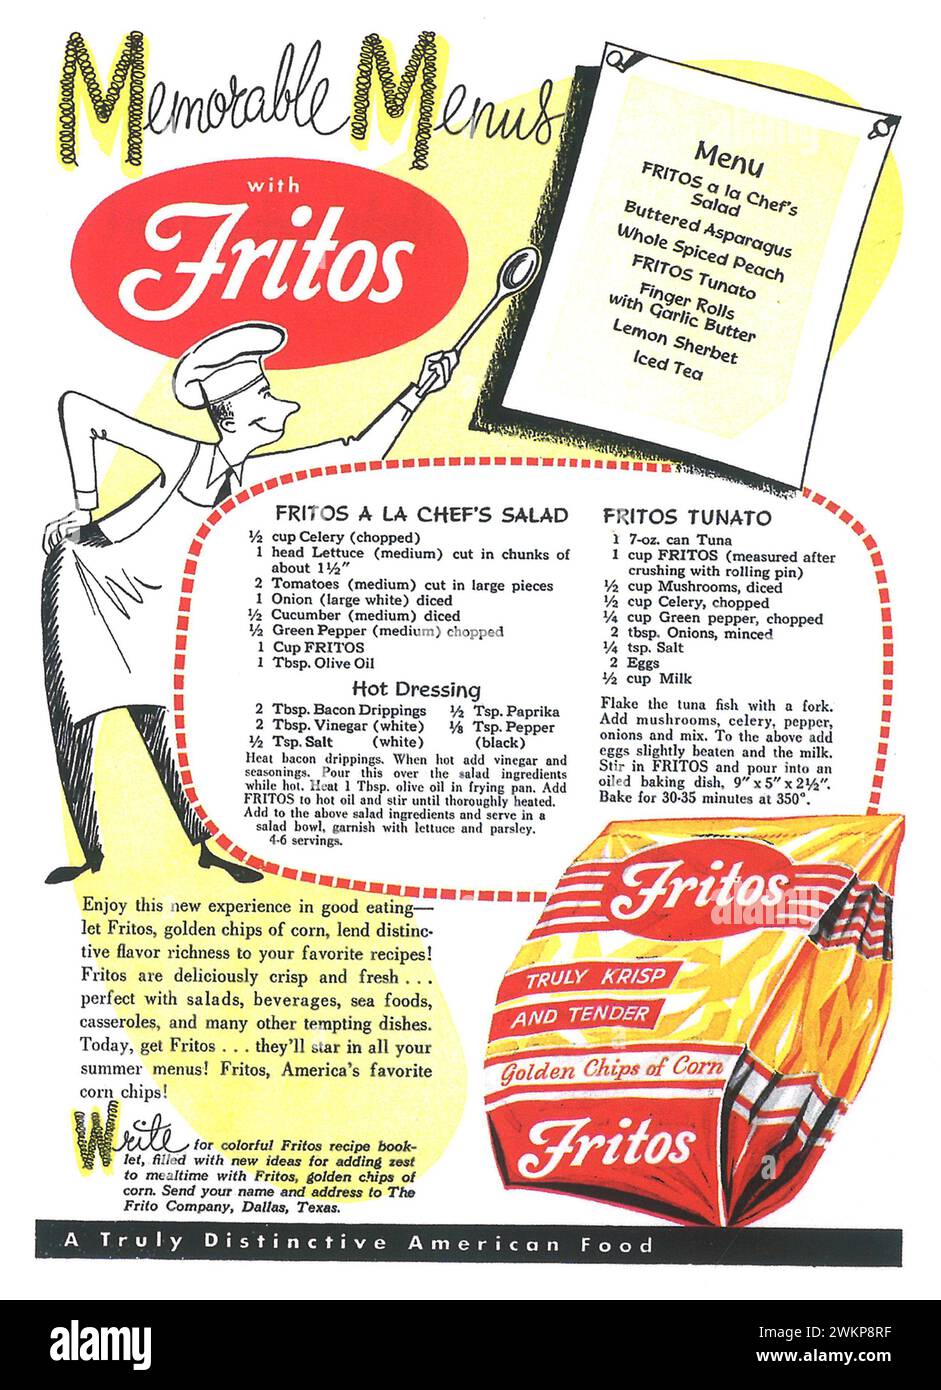 Annuncio a stampa 1950 Fritos Golden chips of corn Foto Stock